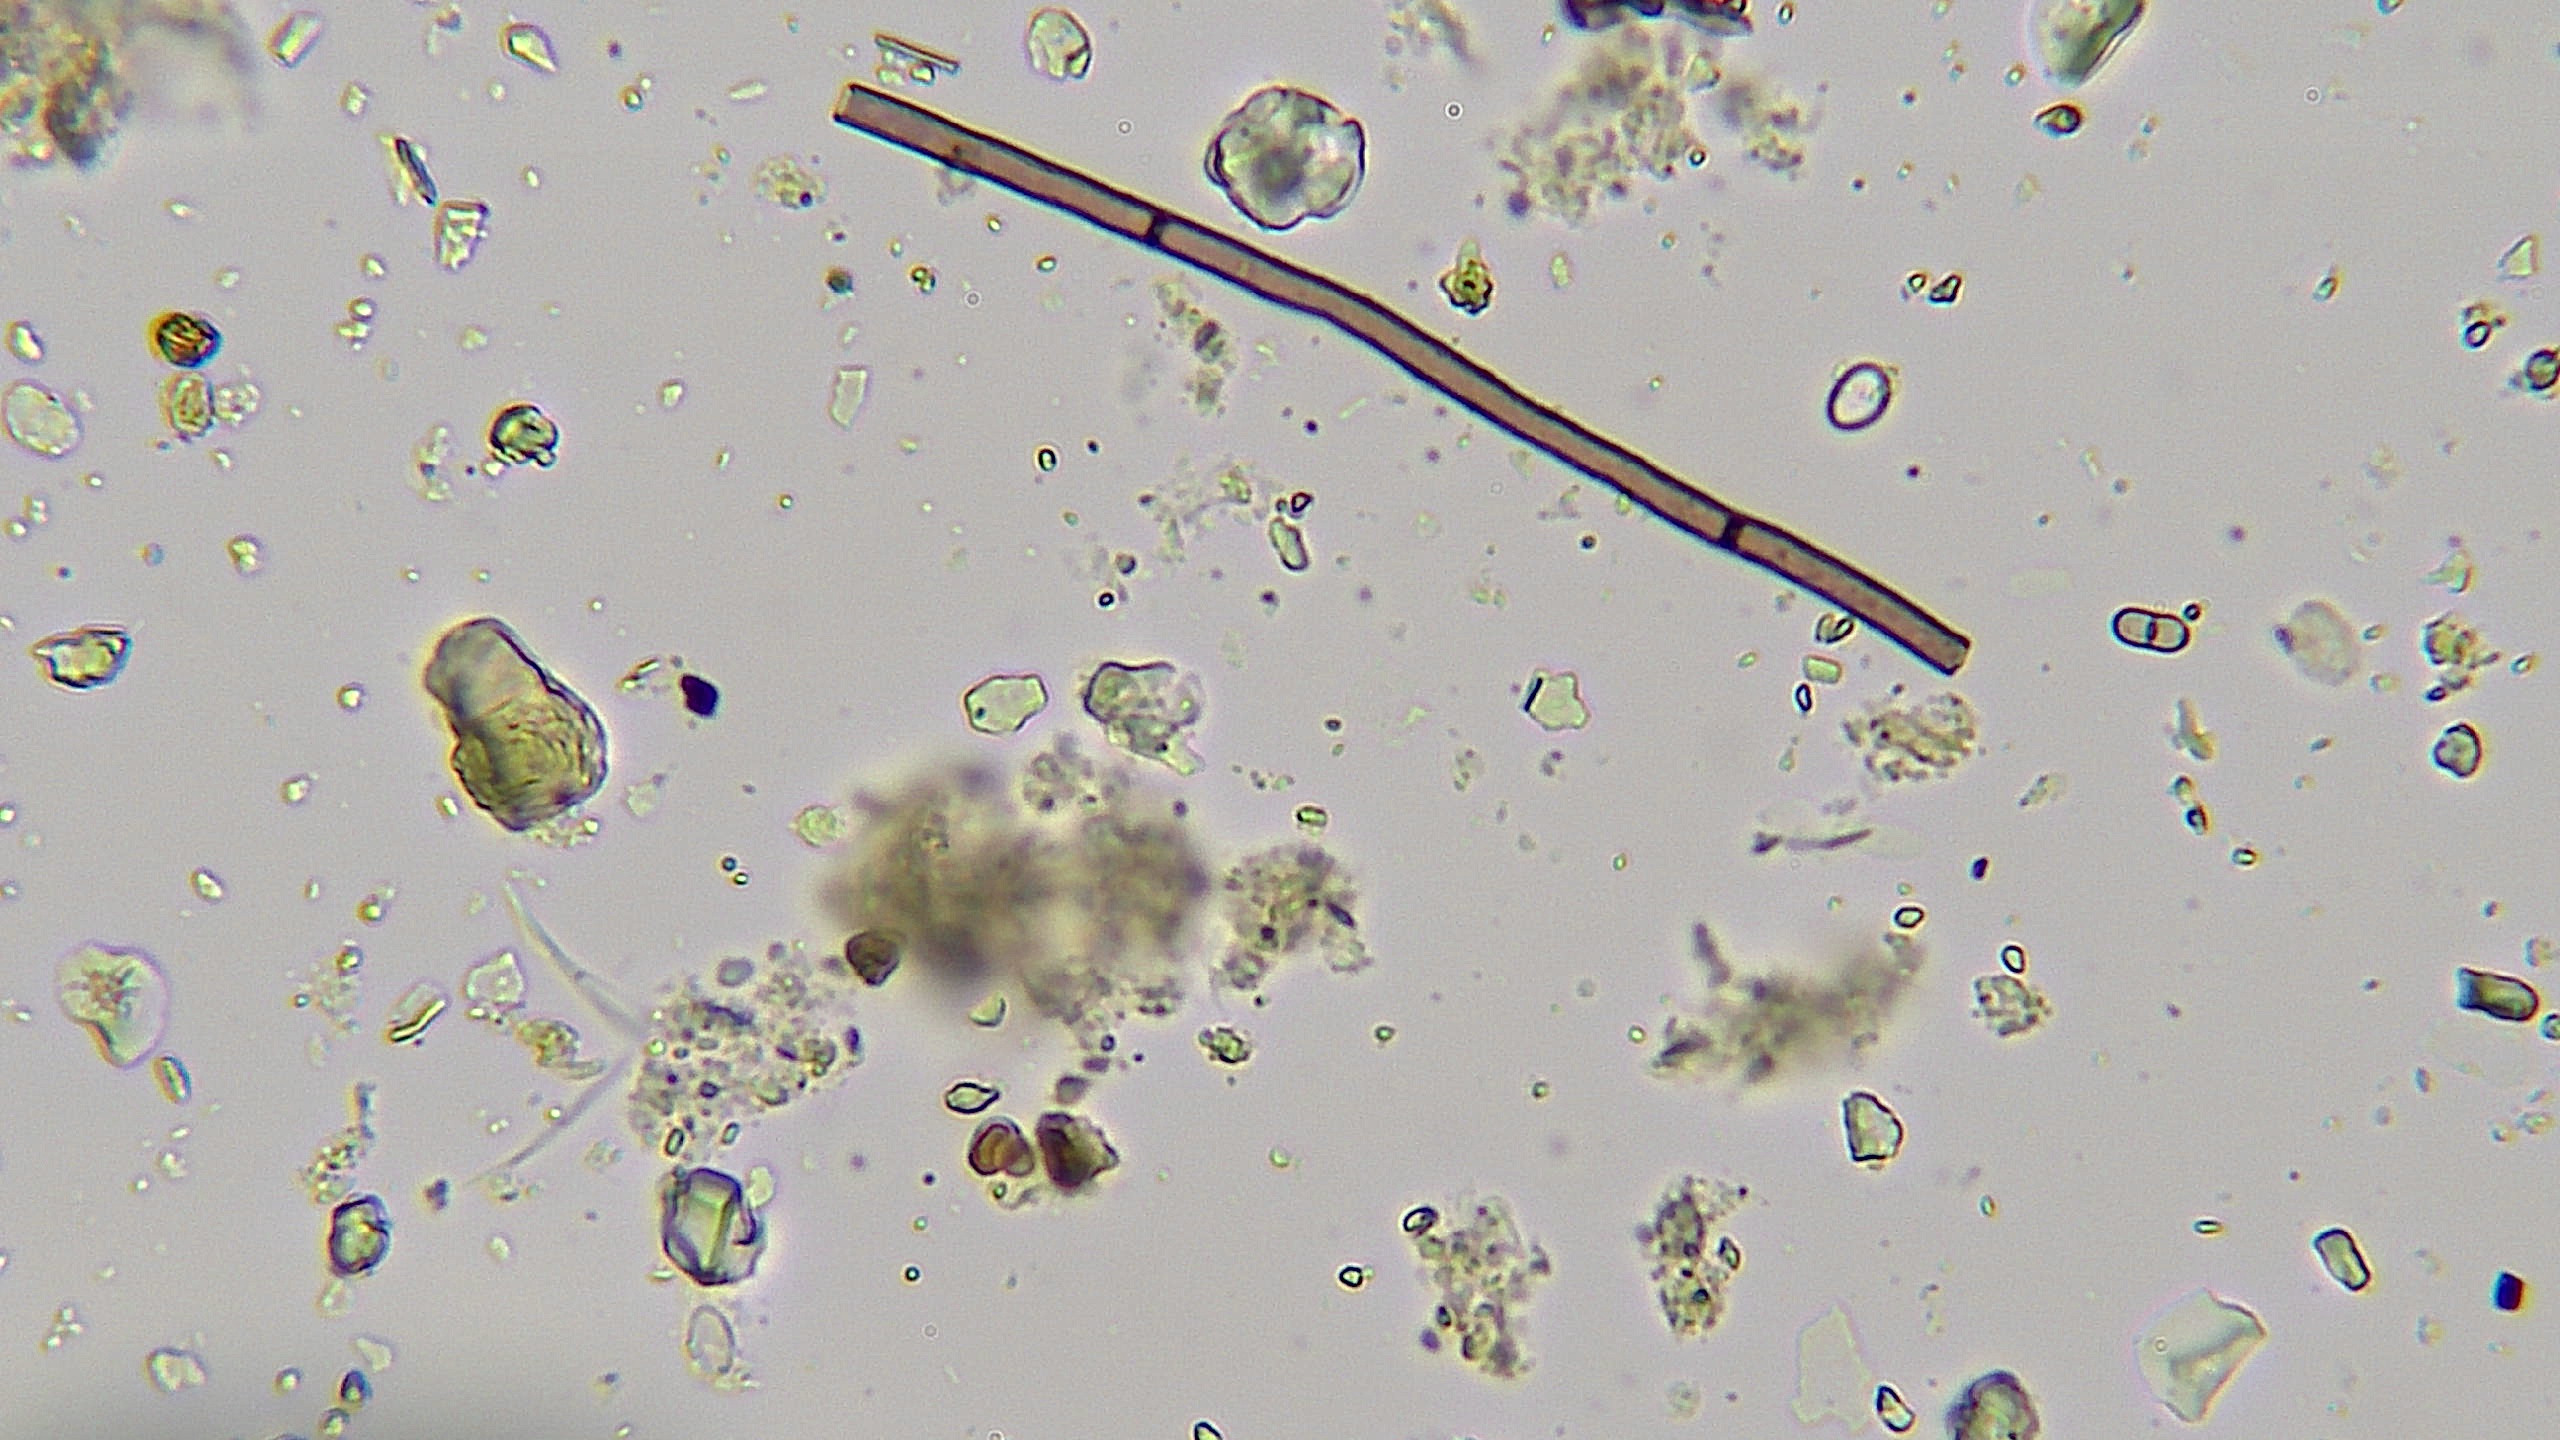 Jordboende svamp set gennem et mikroskop